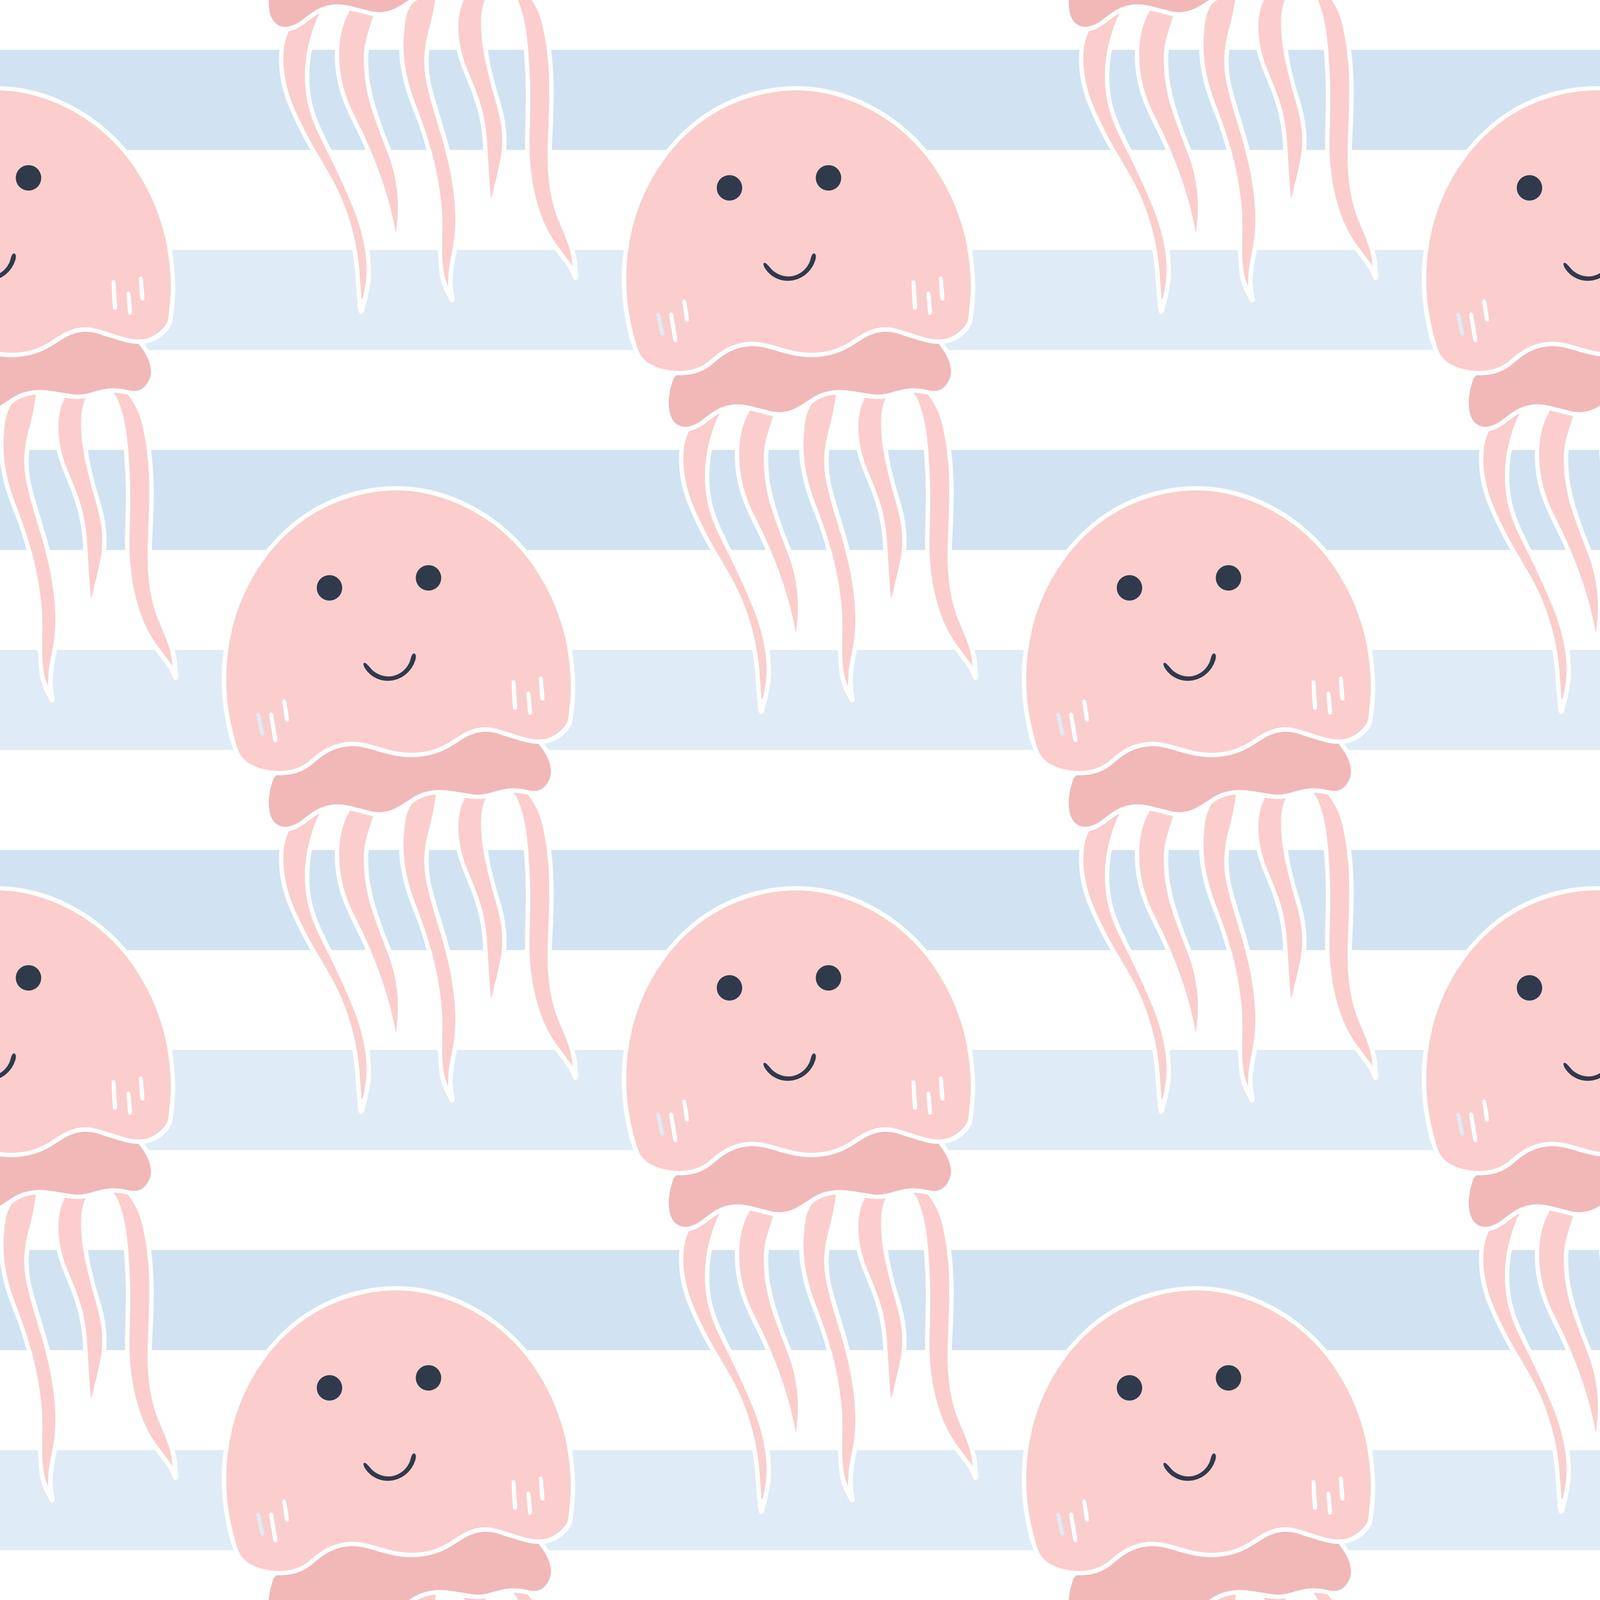 Cute pink jellyfish vector seamless pattern by TassiaK